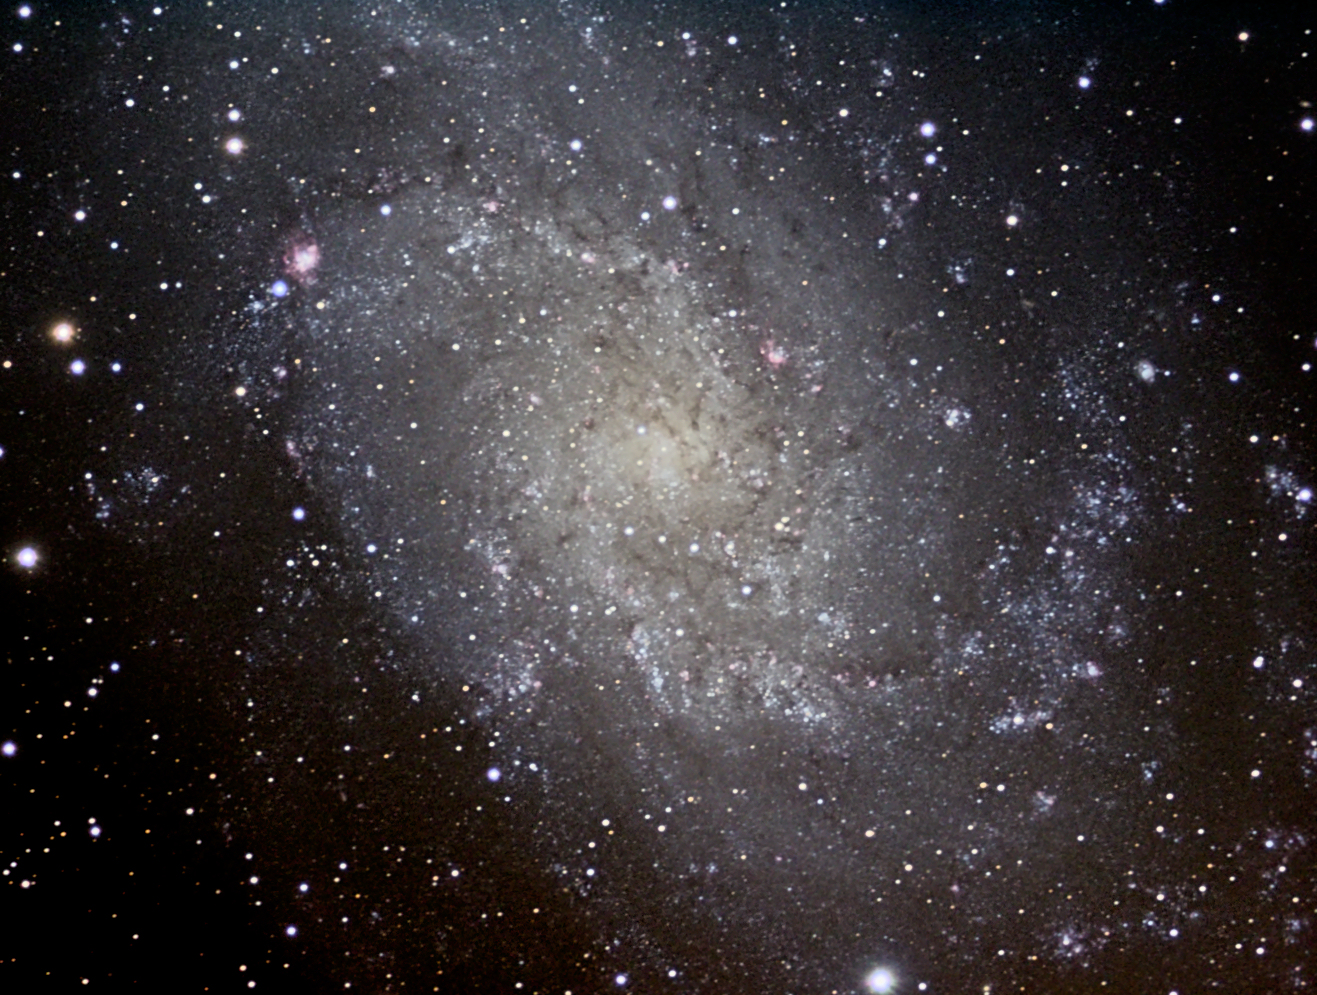 Nearby galaxy M33